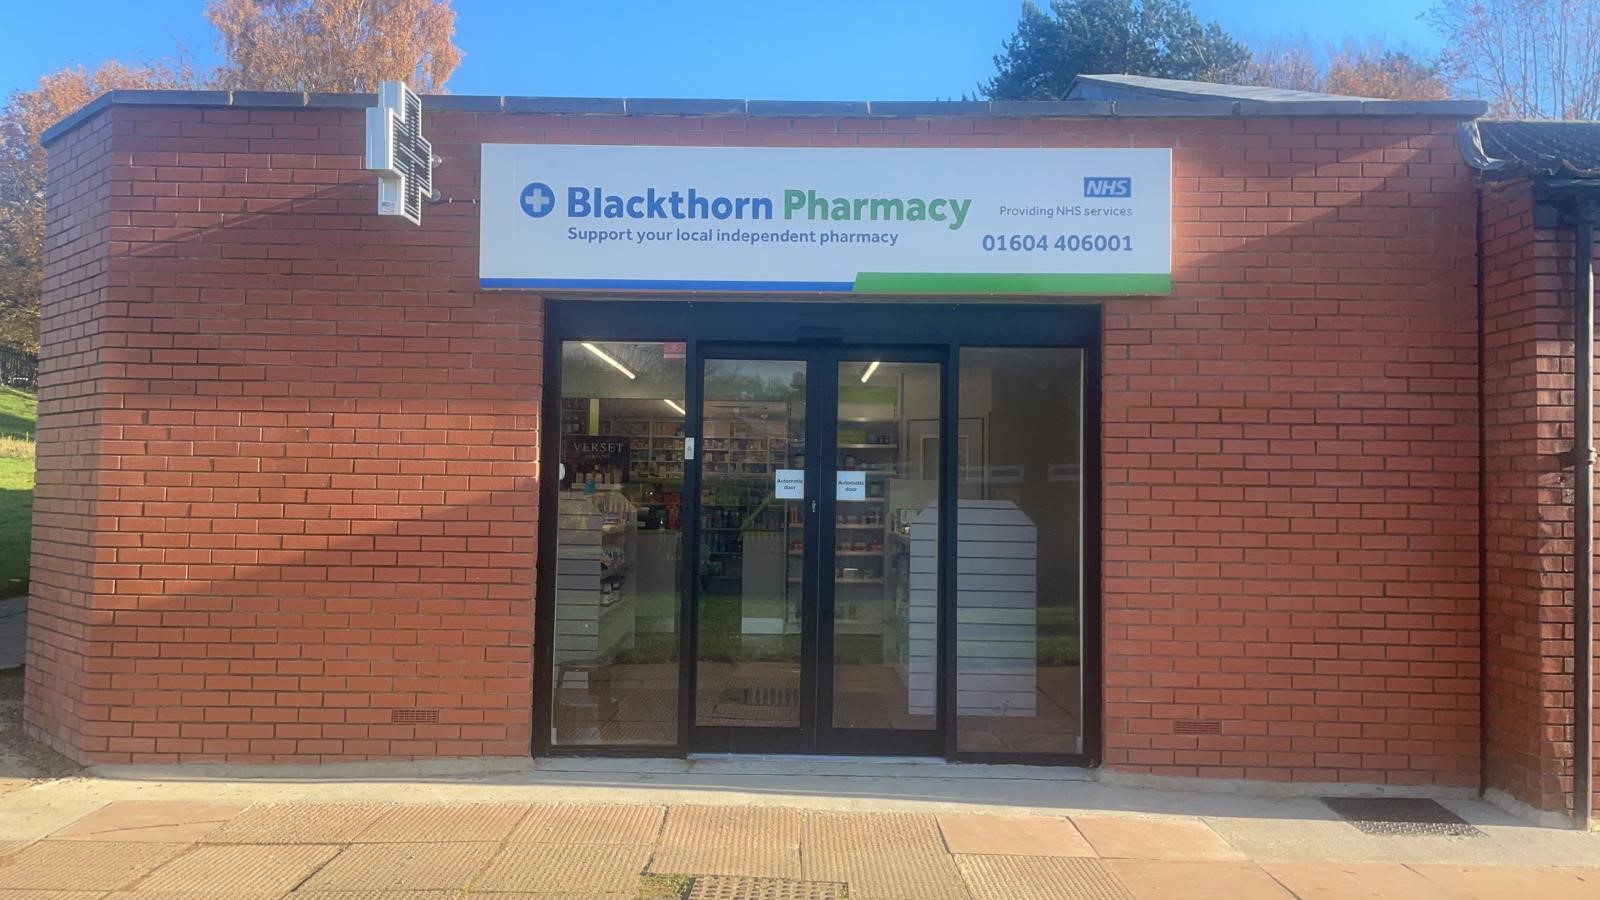 Blackthorn Pharmacy